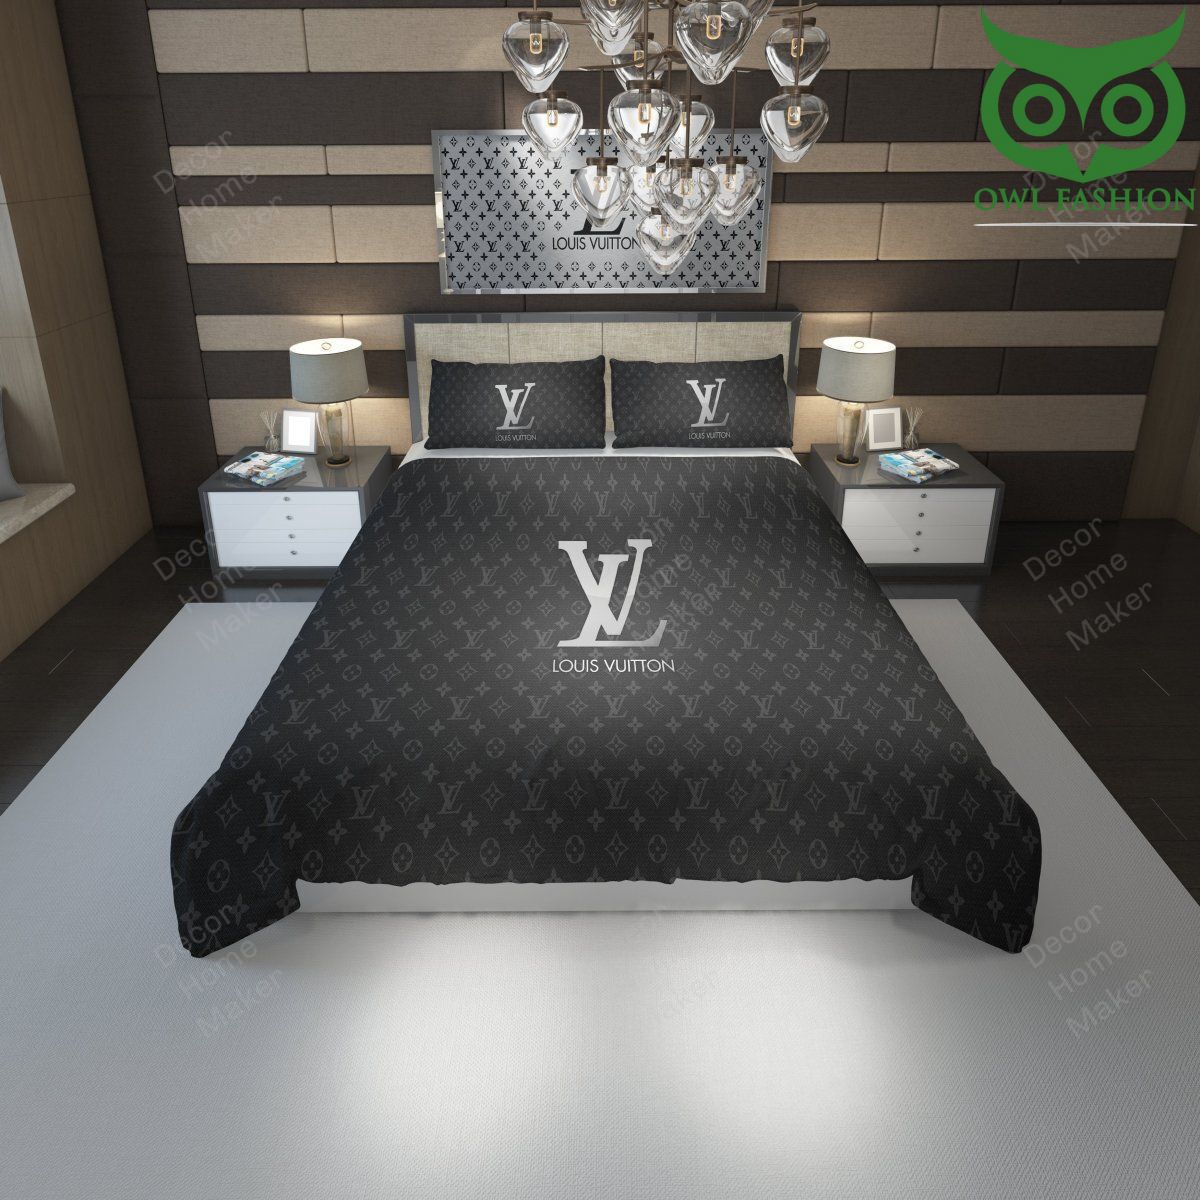 147 PREMIUM black Louis Vuitton bedding set